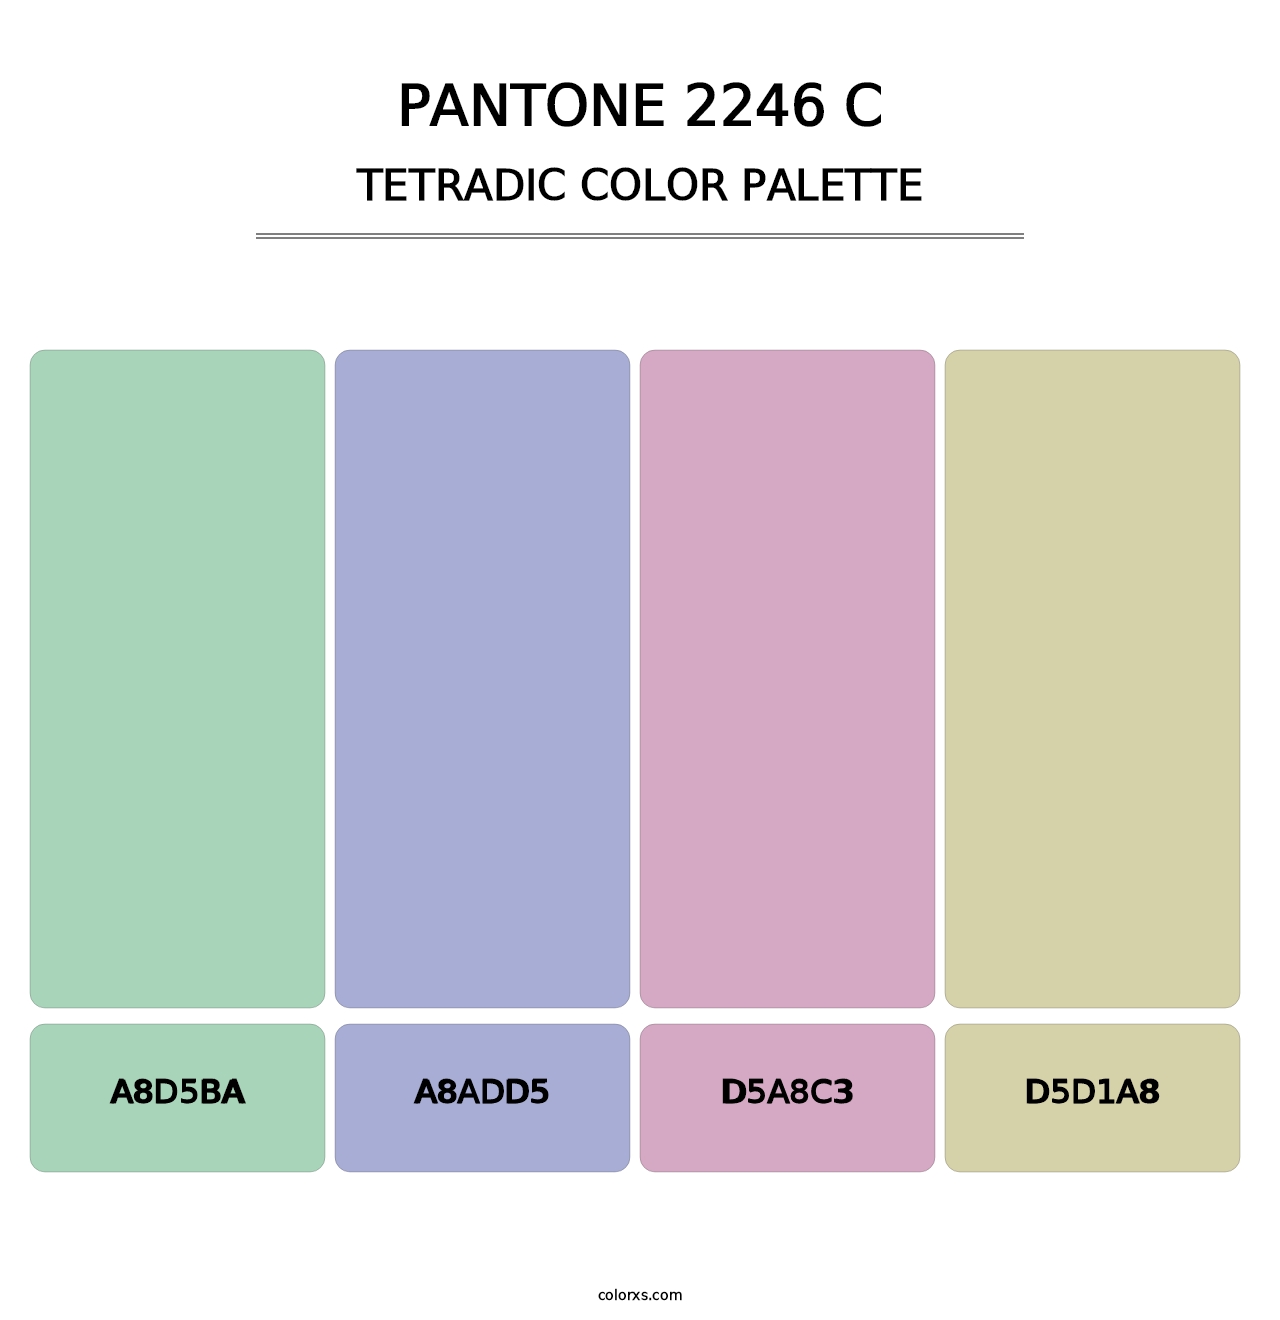 PANTONE 2246 C - Tetradic Color Palette